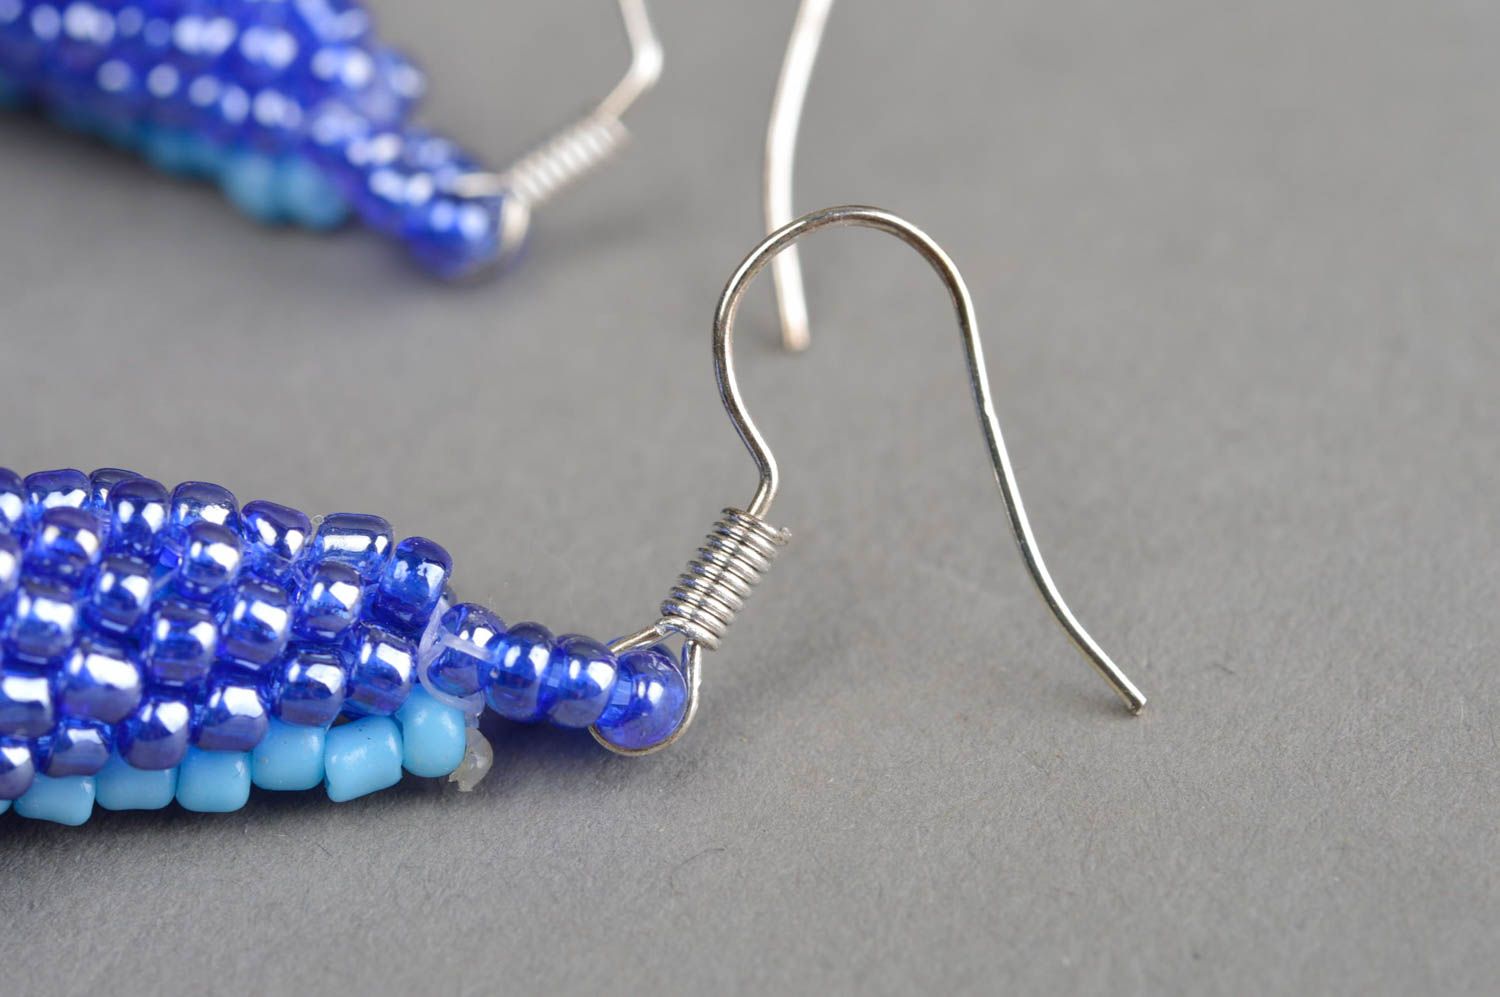 Stylish handmade beaded earrings fashion accessories bead weaving ideas photo 4